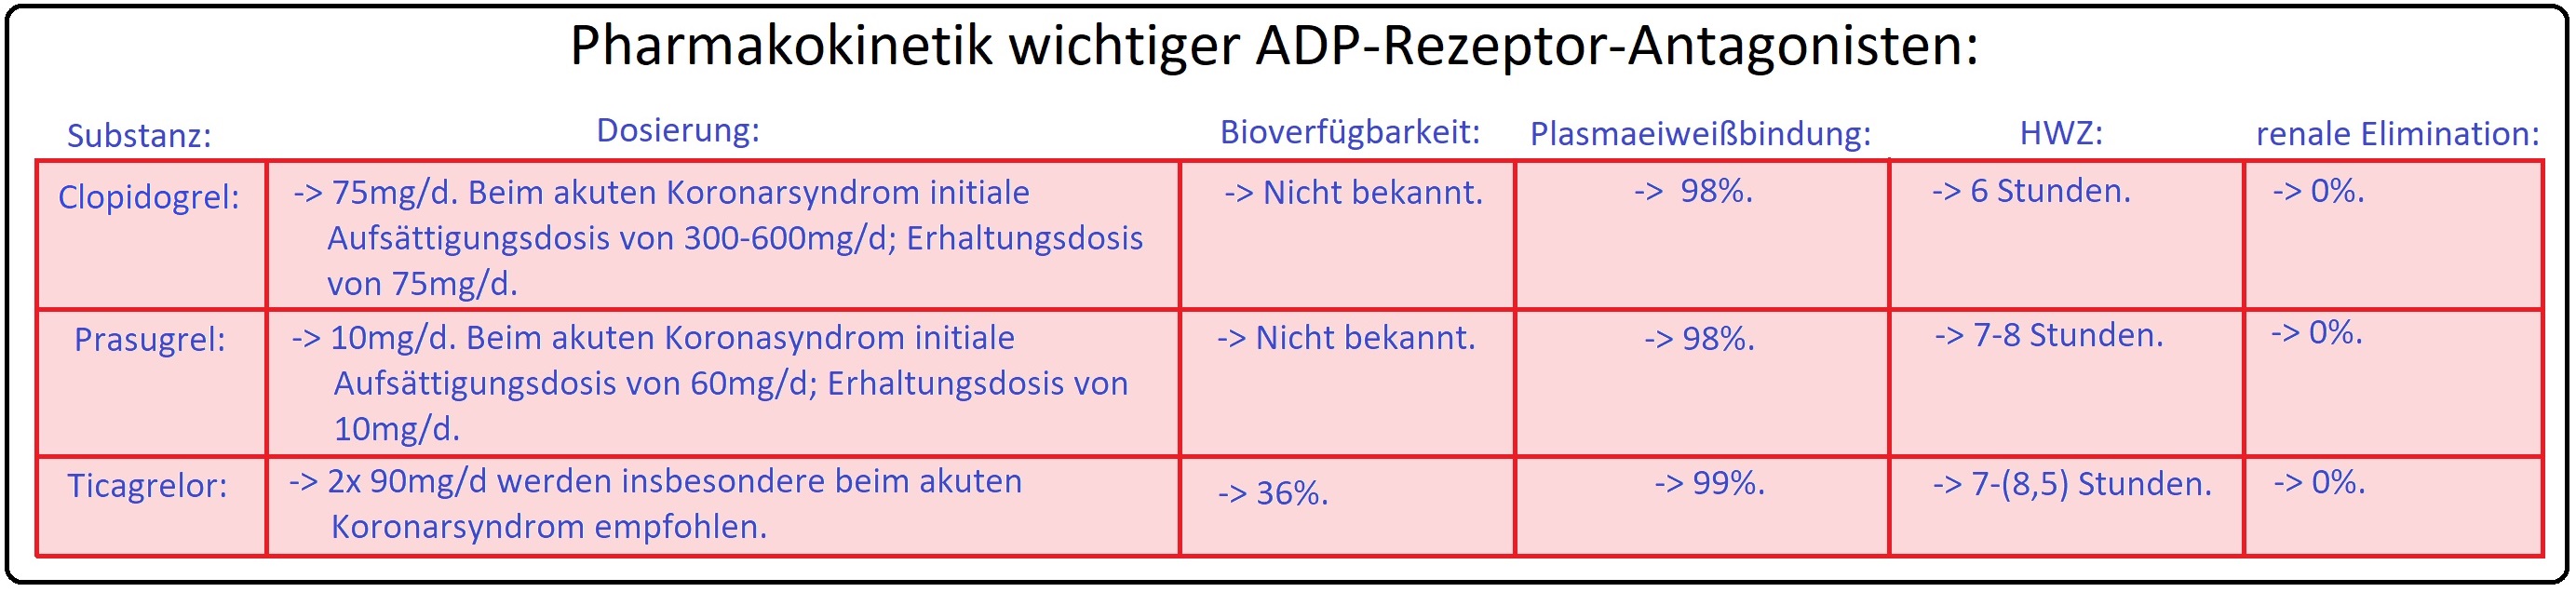 27 Pharmakokinetik wichtiger ADP Rezeptor Antagonisten